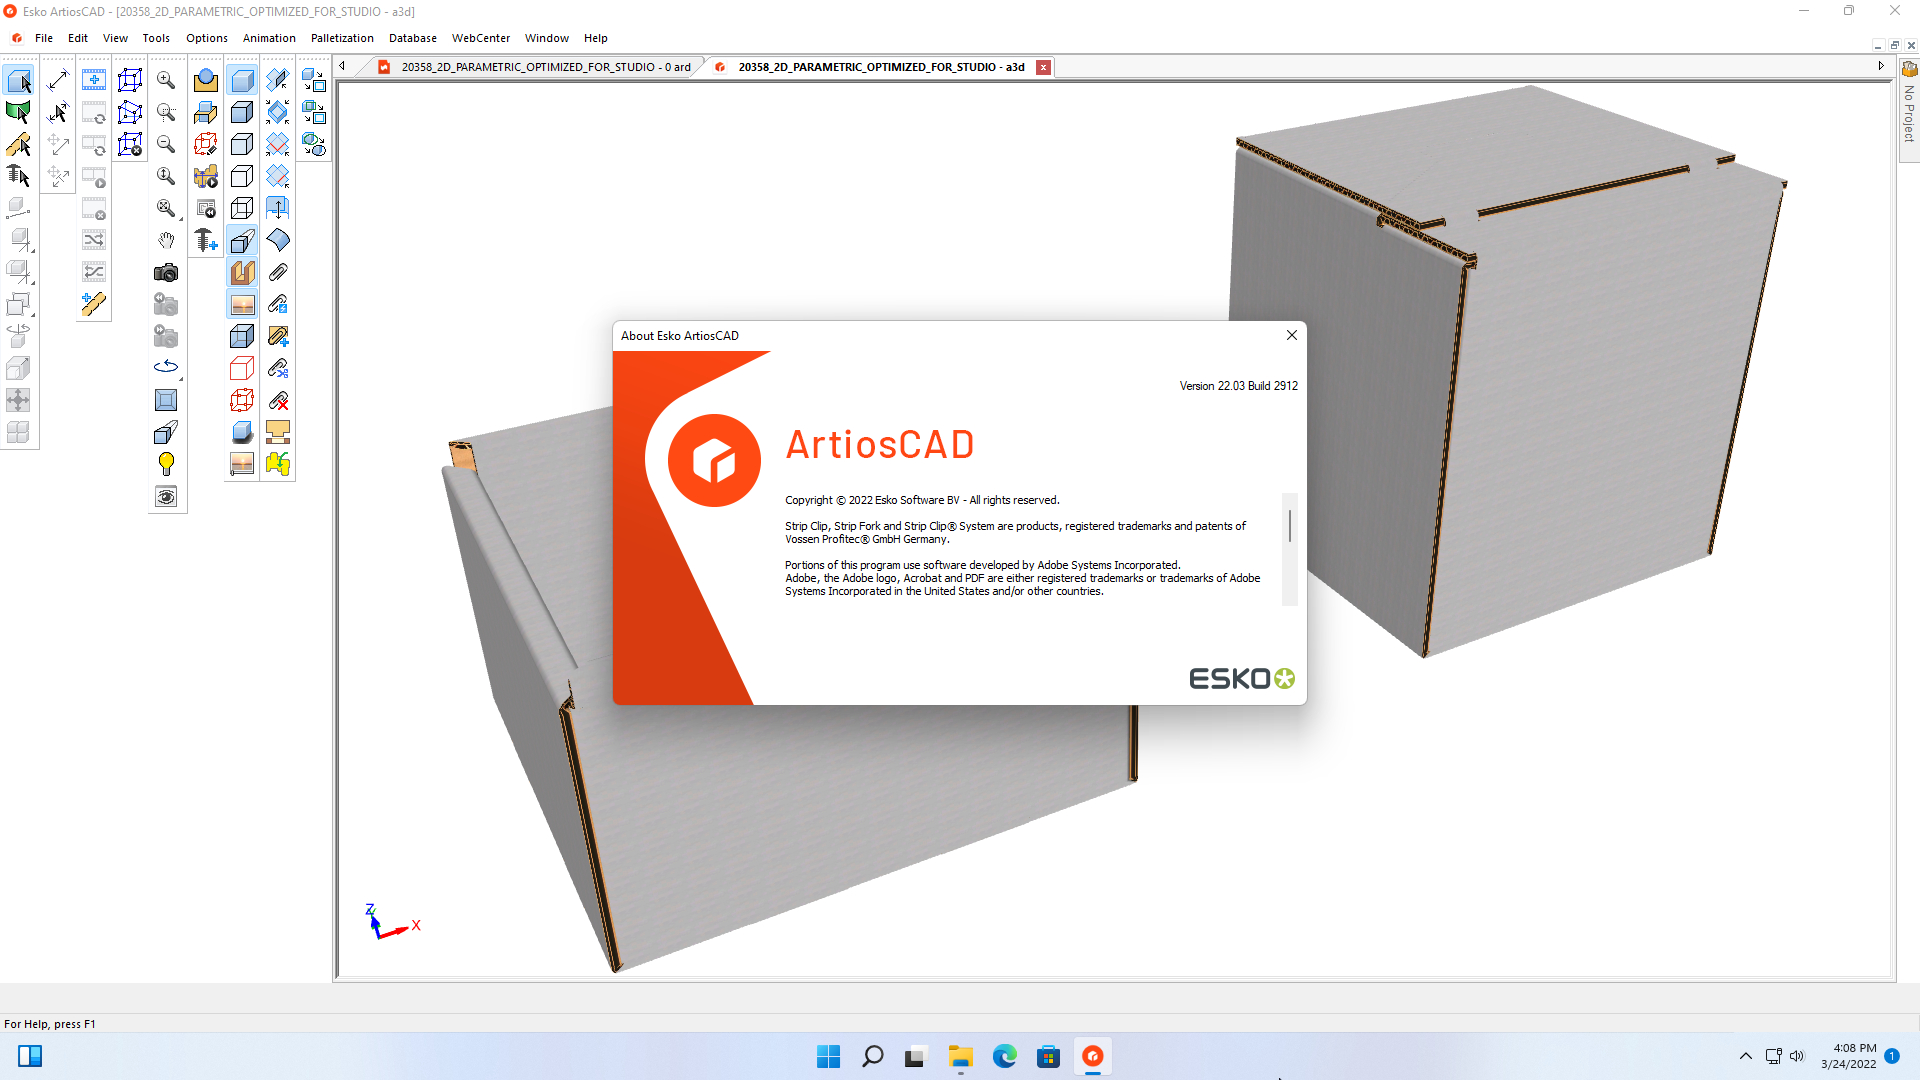 Working with ESKO ArtiosCAD 22.03 Build 2912 x64 full license